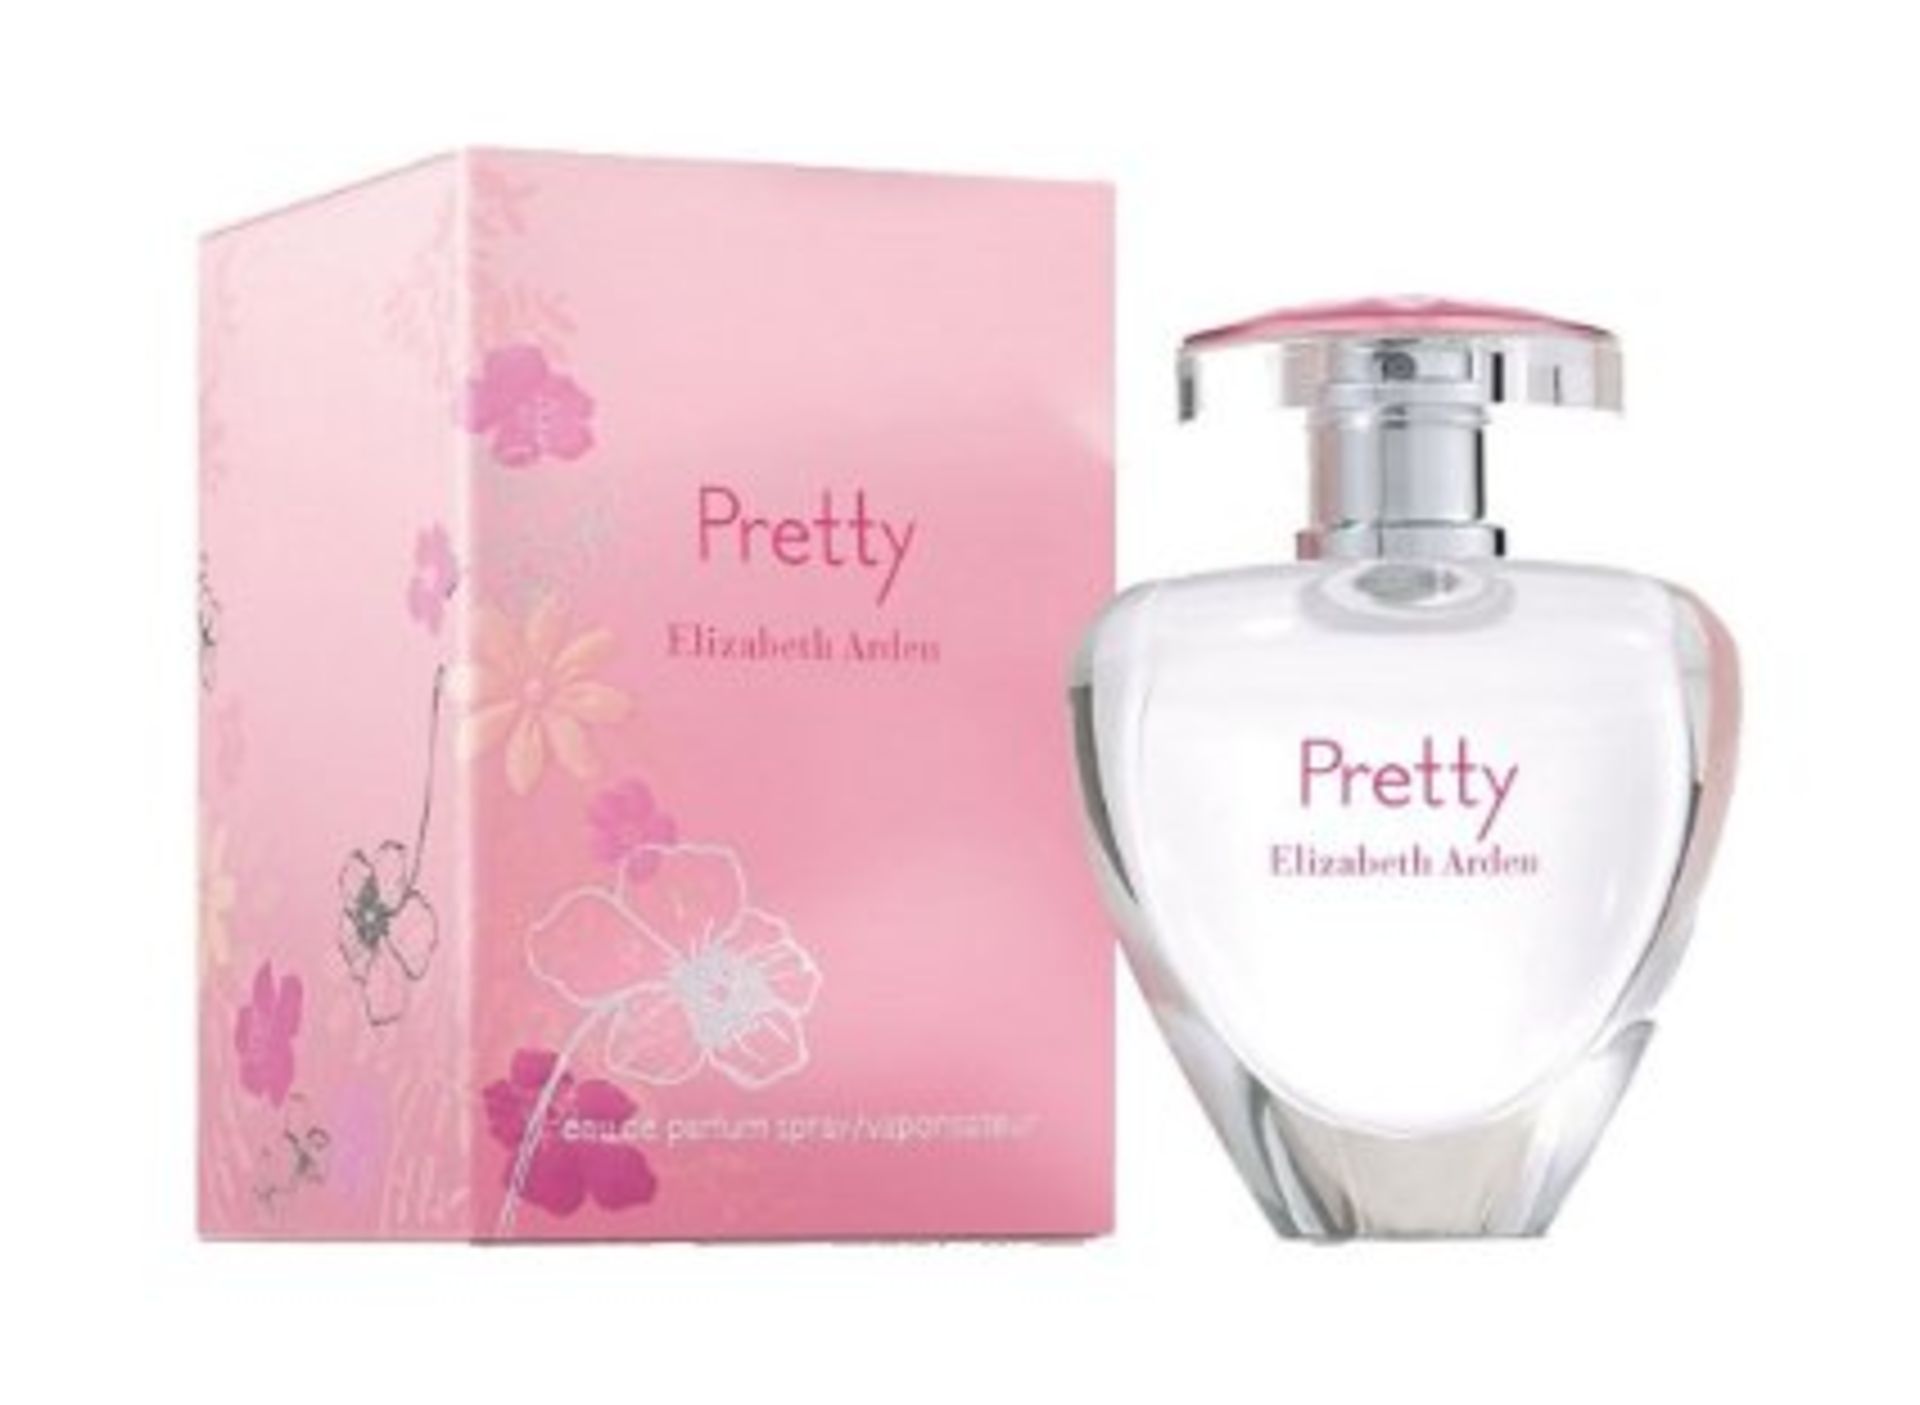 V Elizabeth Arden Pretty Eau de Parfum Spray 50ml